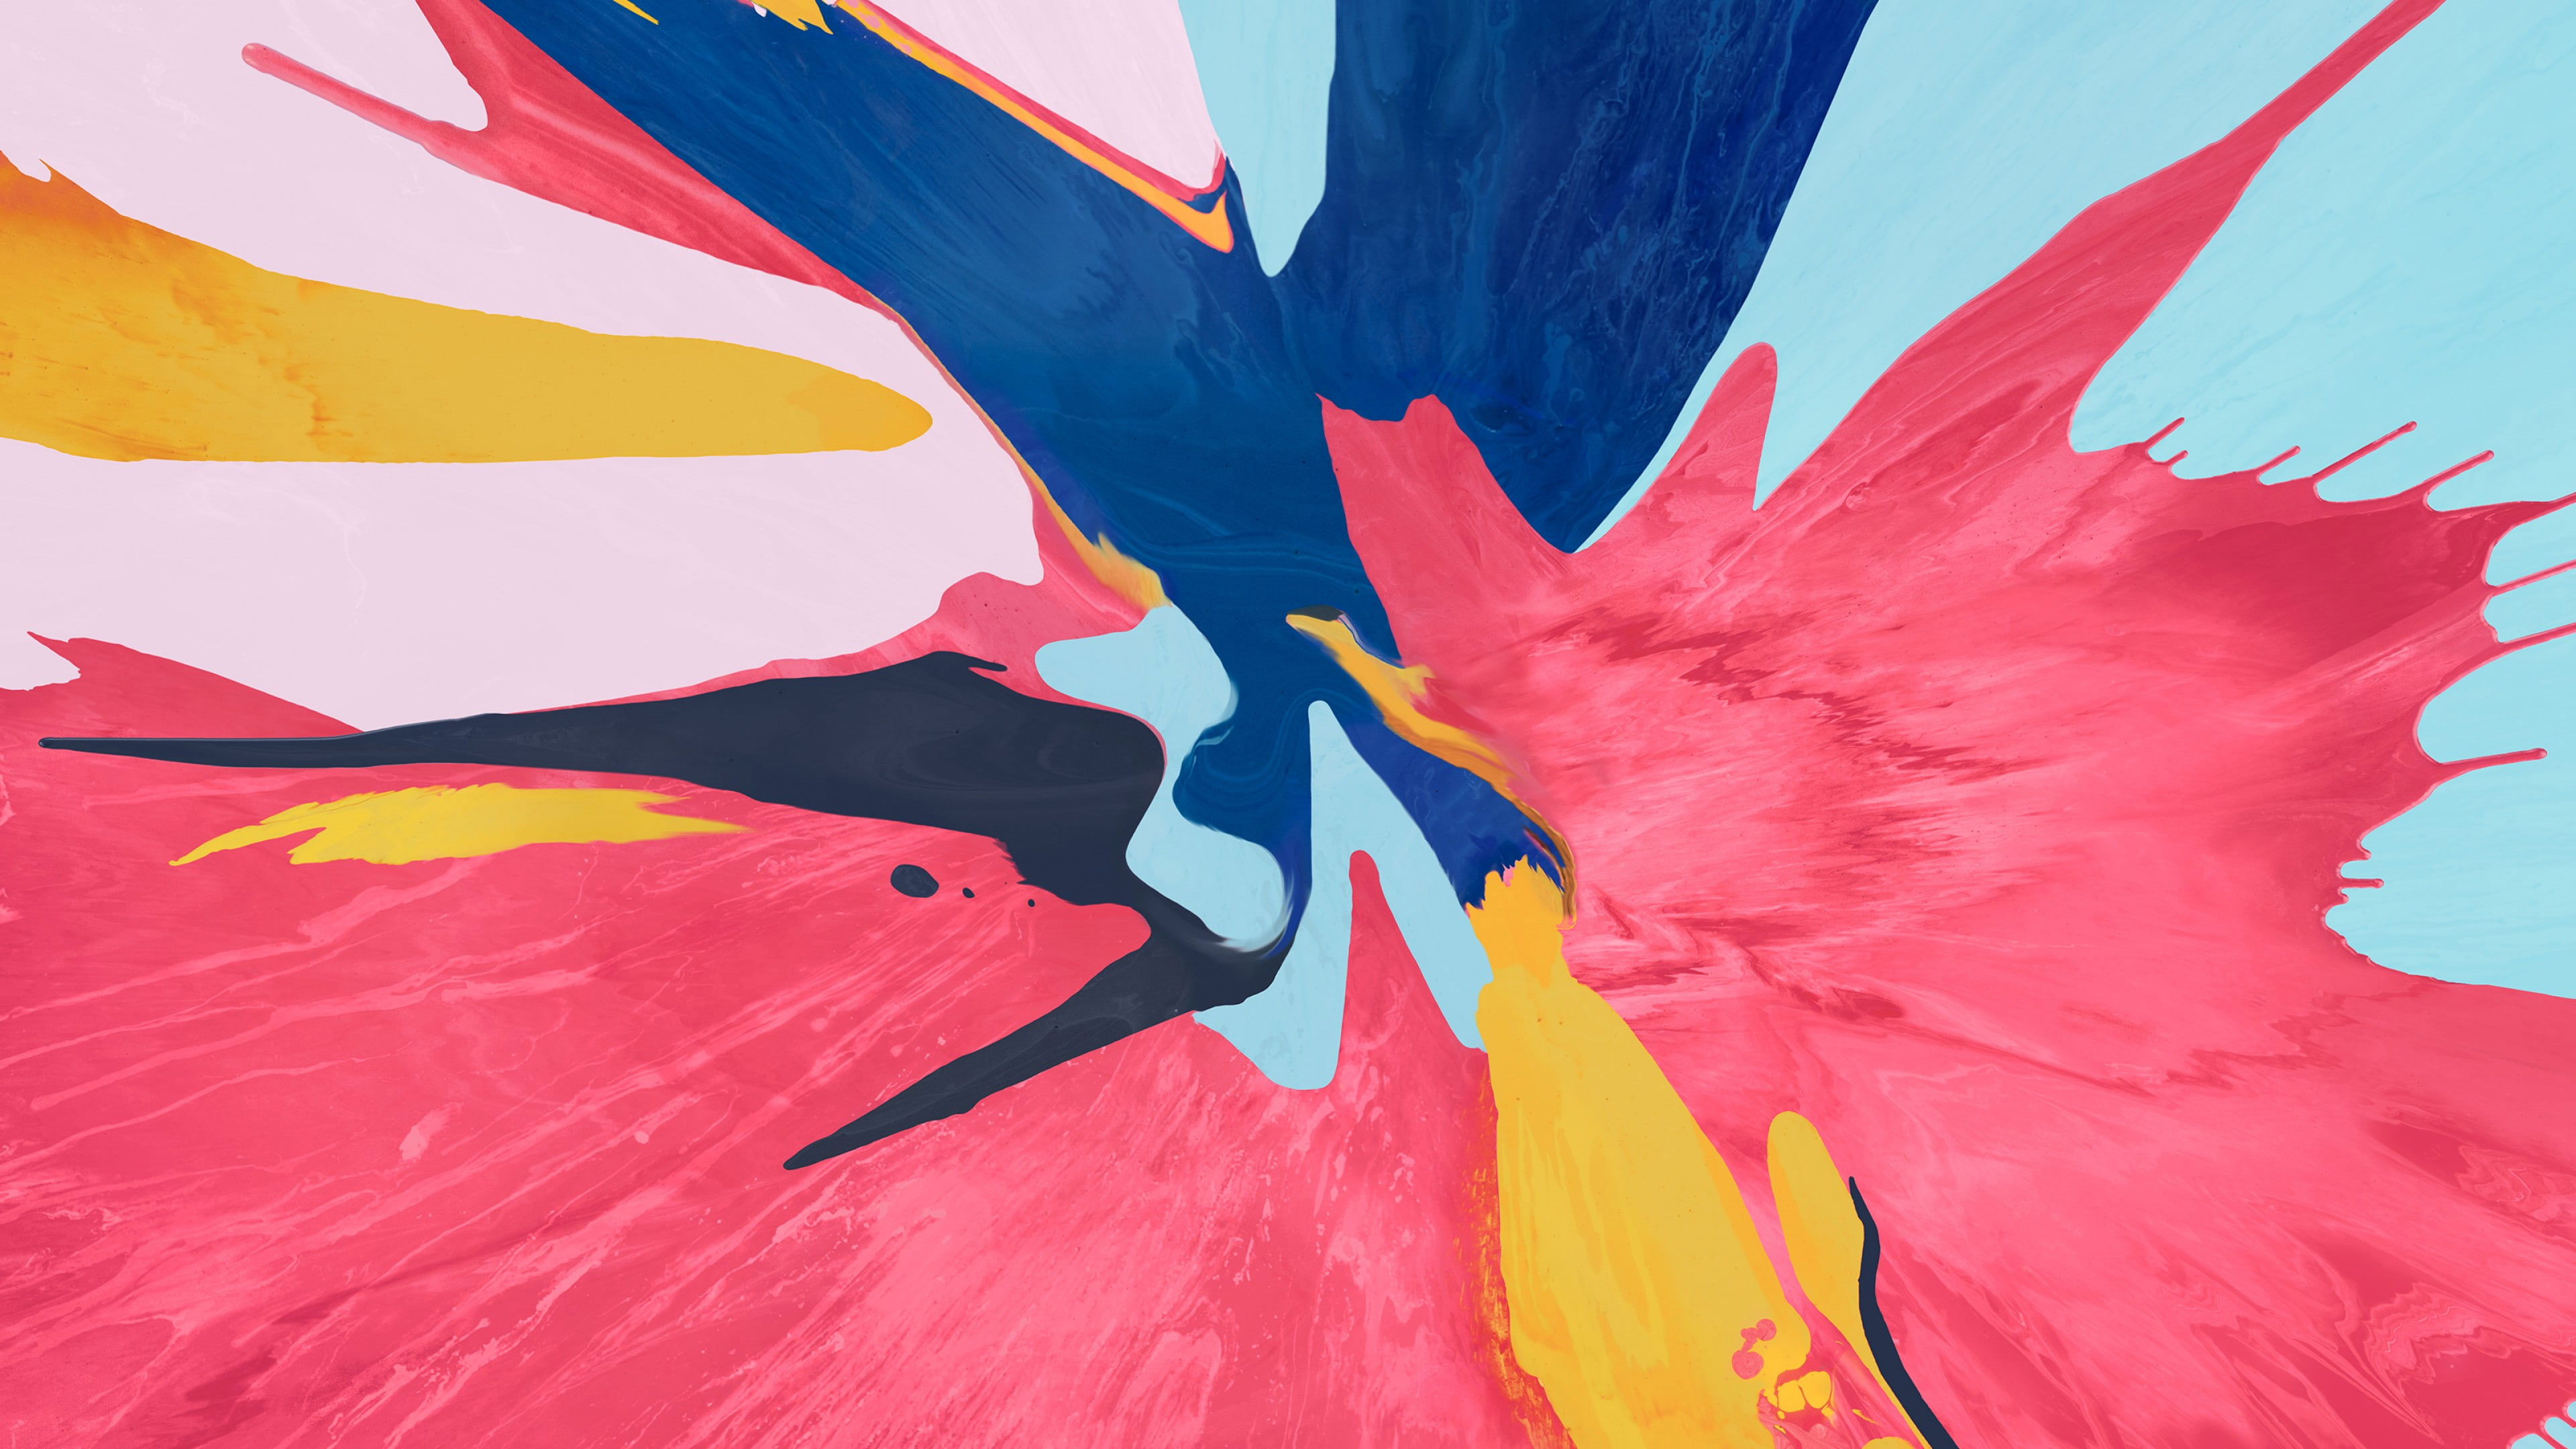 Wallpaper Abstract, Colorful, Ipad Pro 2018, 4k, 4k, Abstract